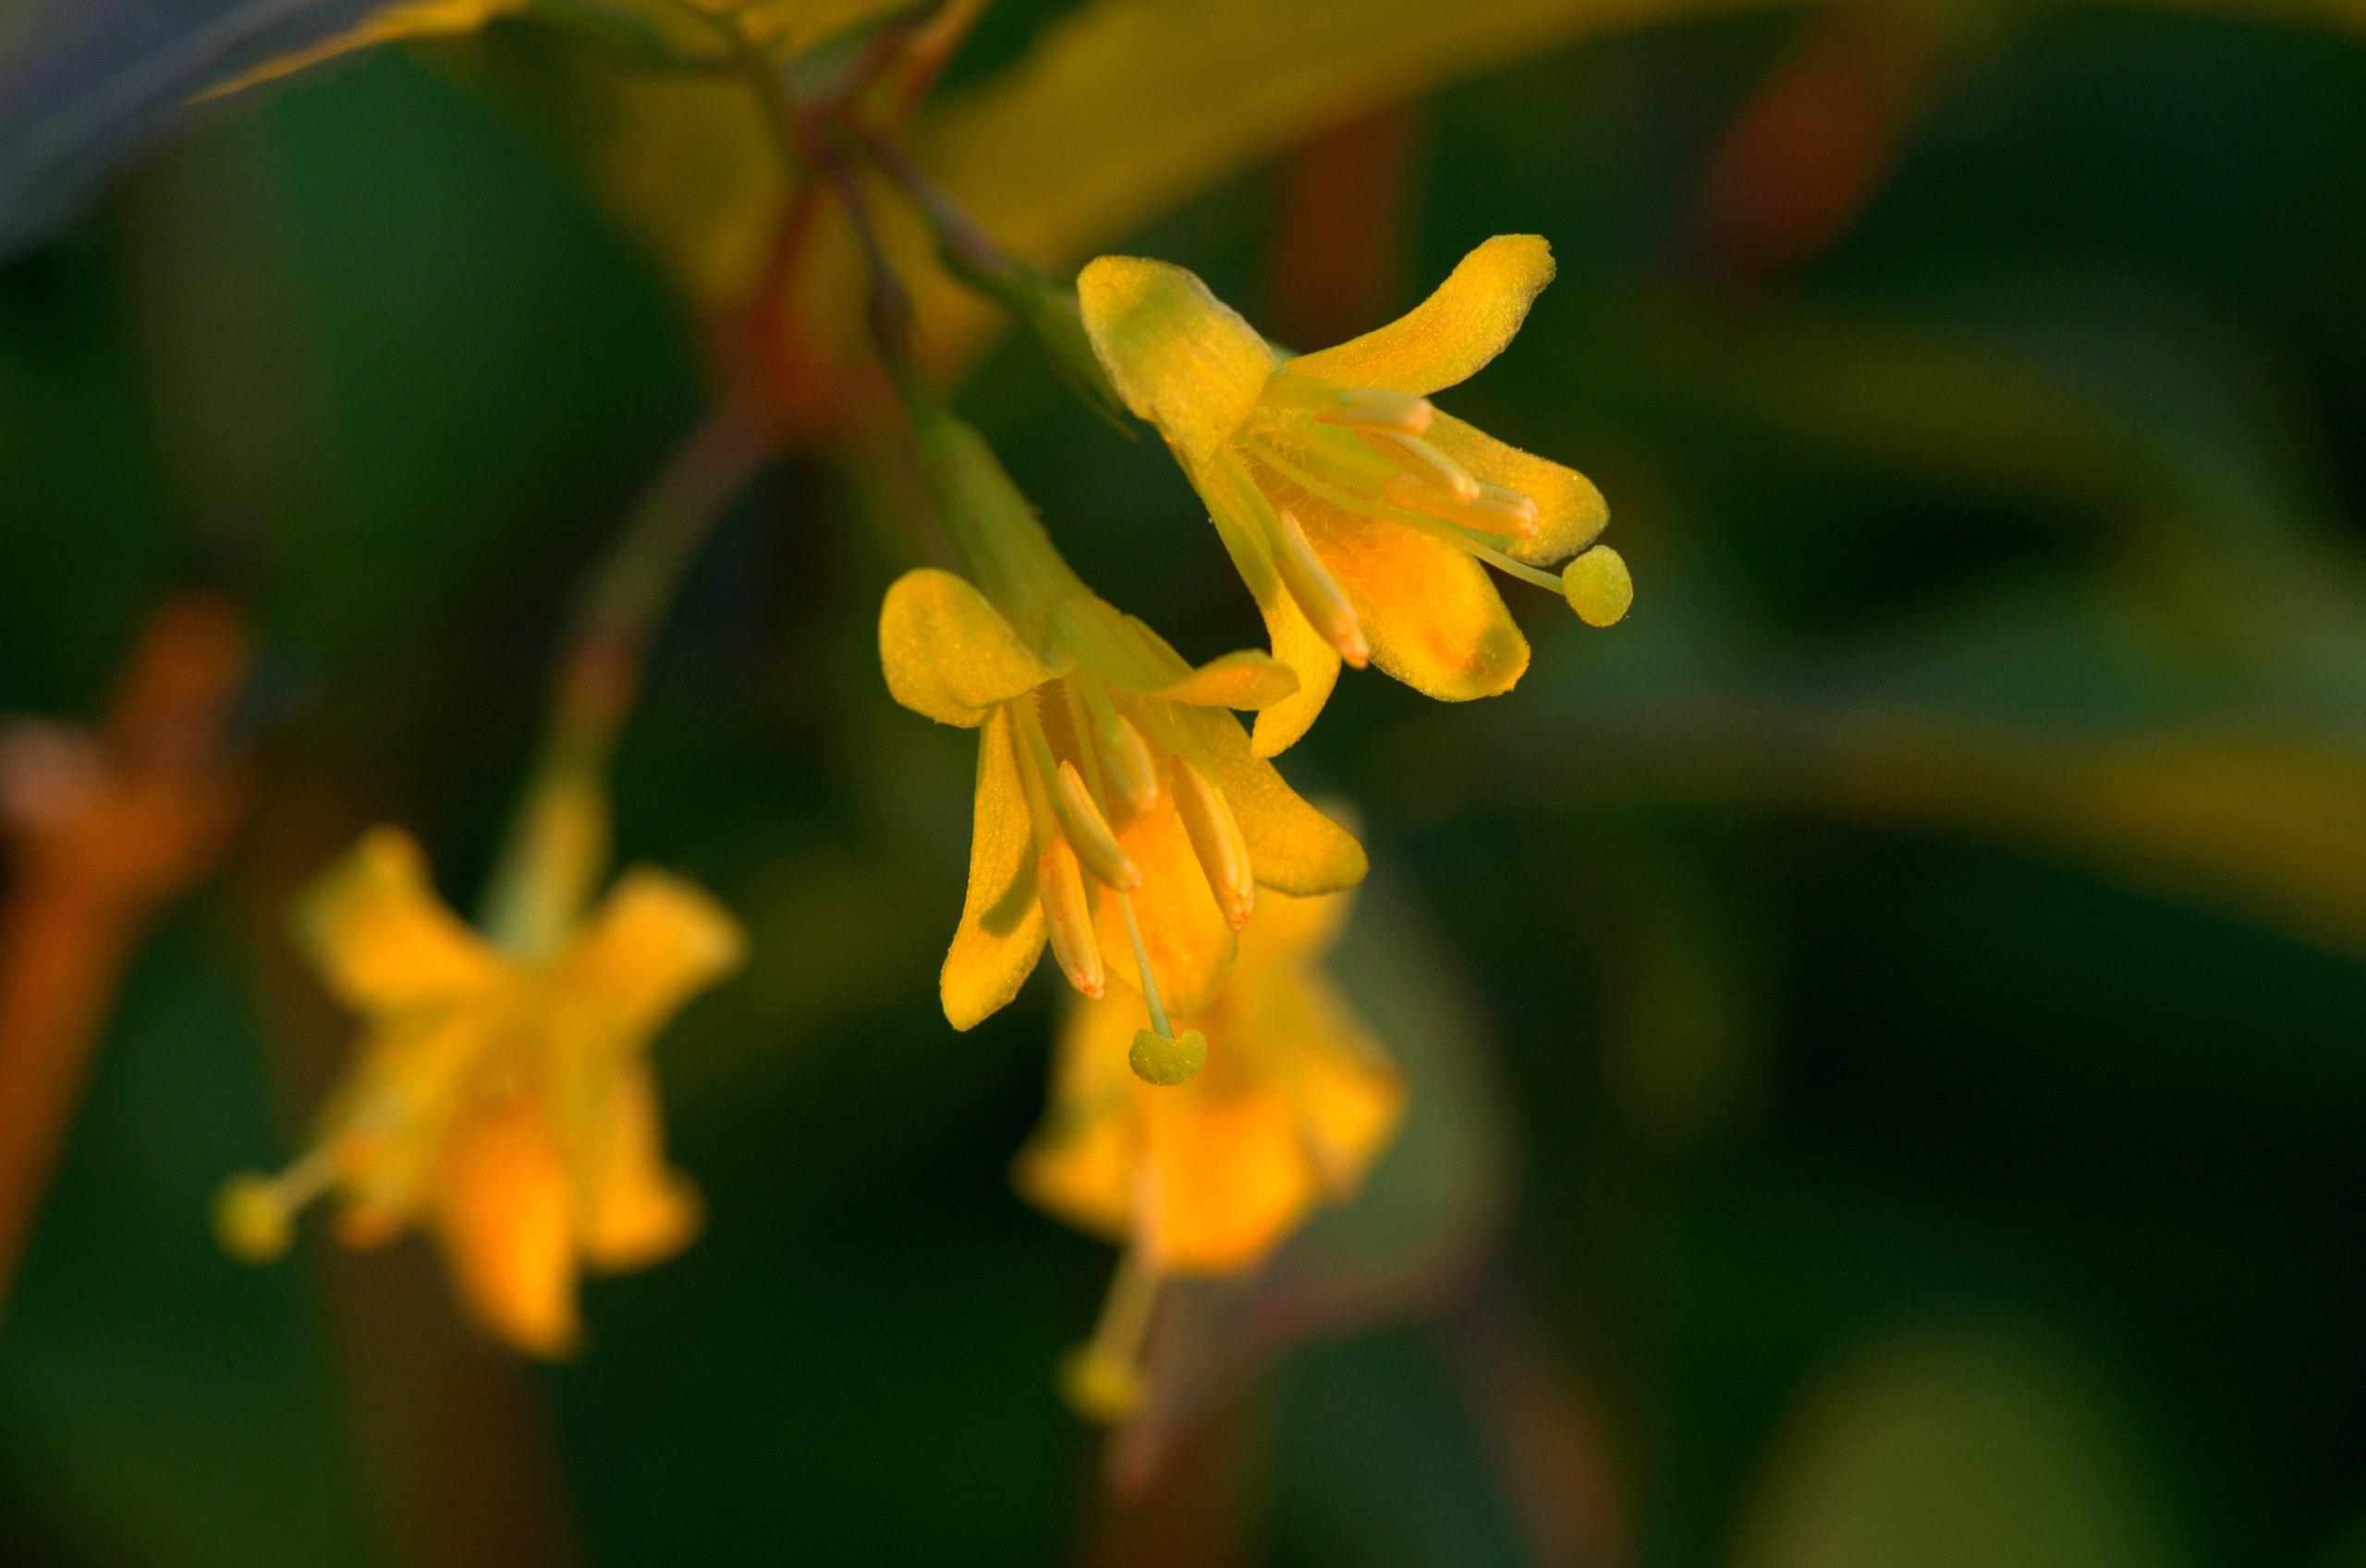 yellow flowers with stamens, yellow stigmas and green-orange stems 